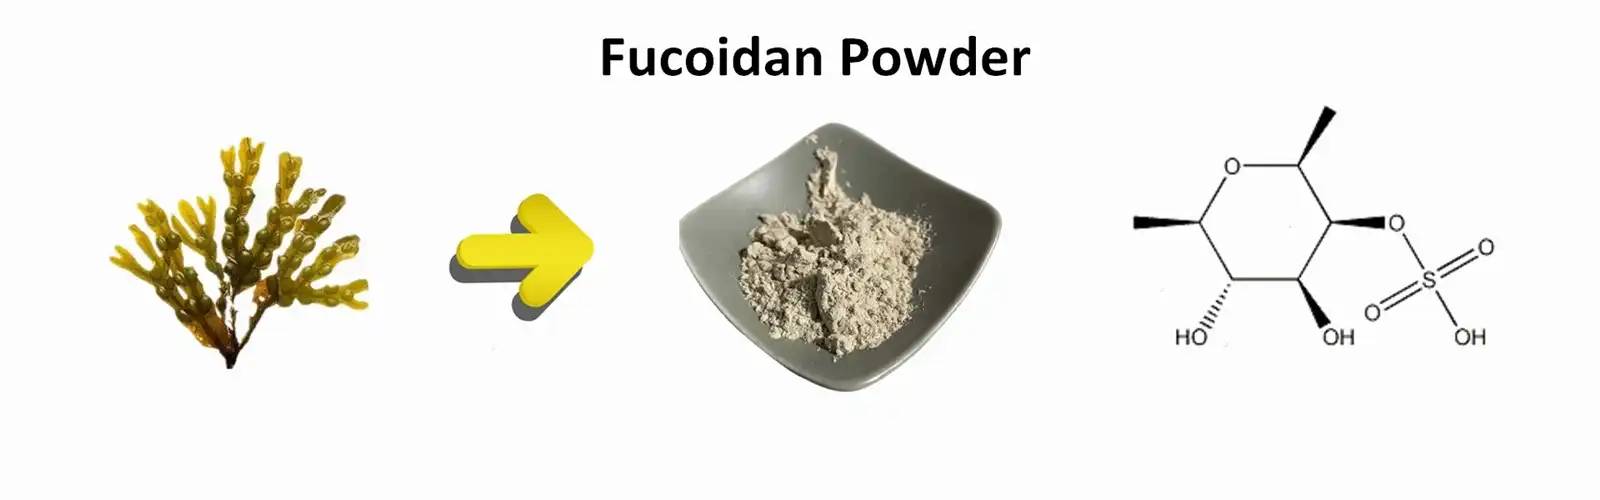 Fucoidan powder